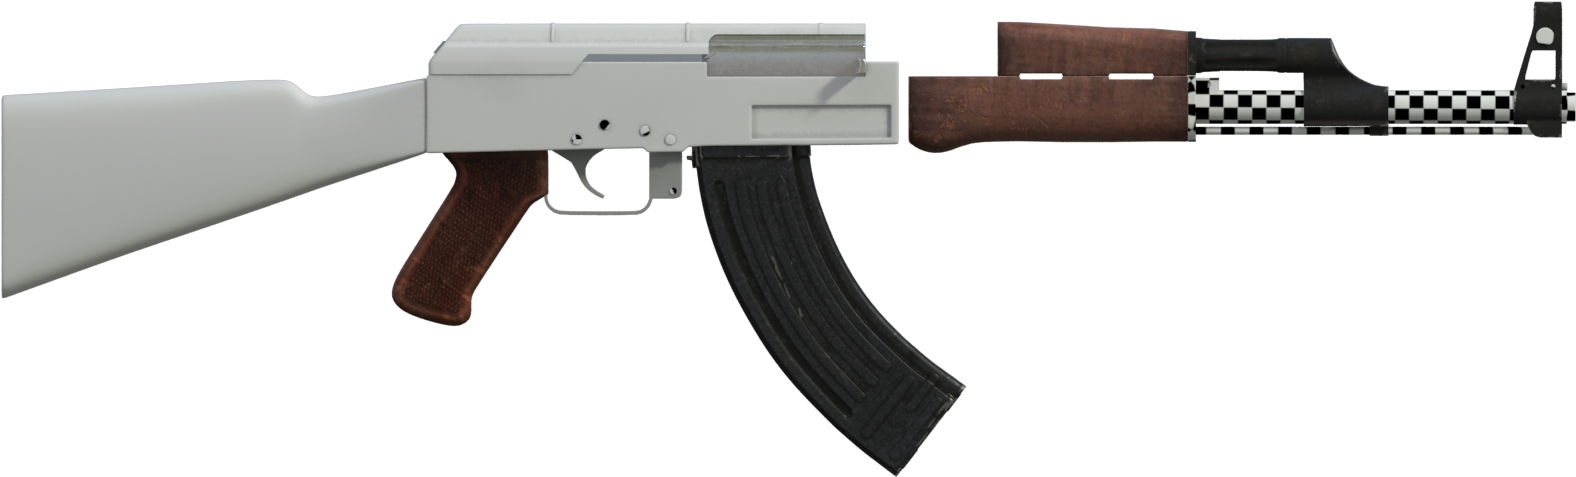 AK 47 Transparent Background